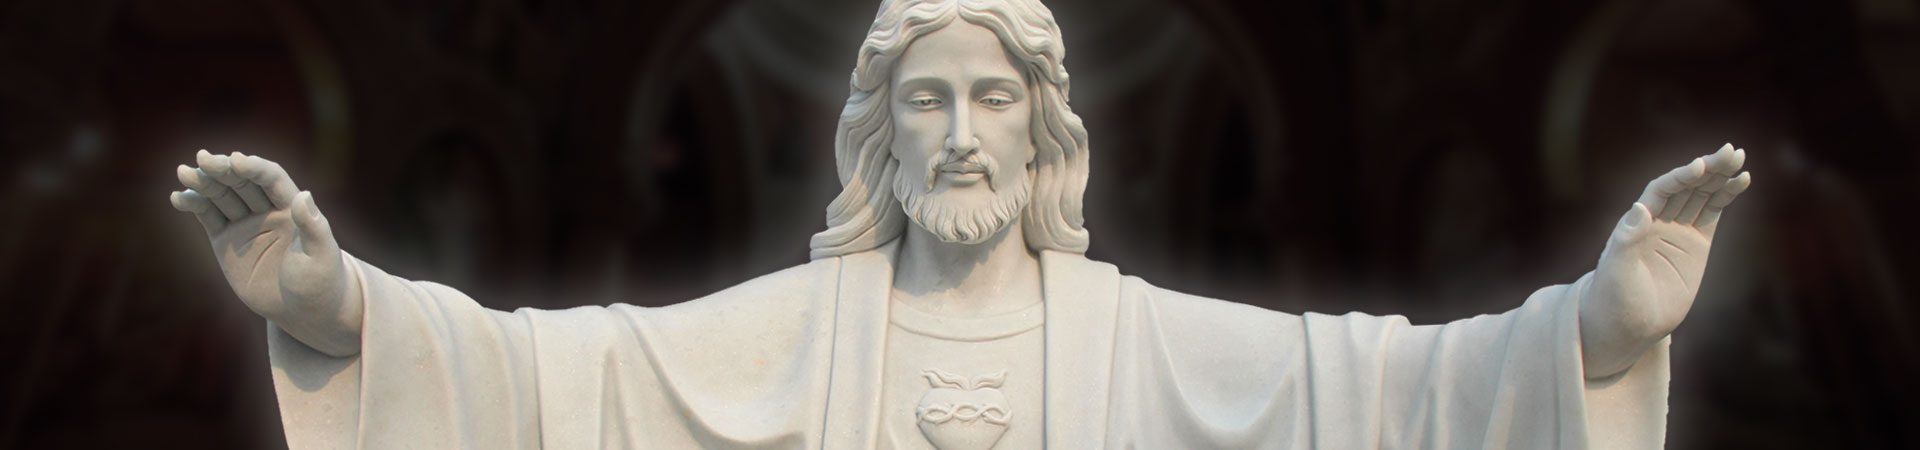 Jesus statues